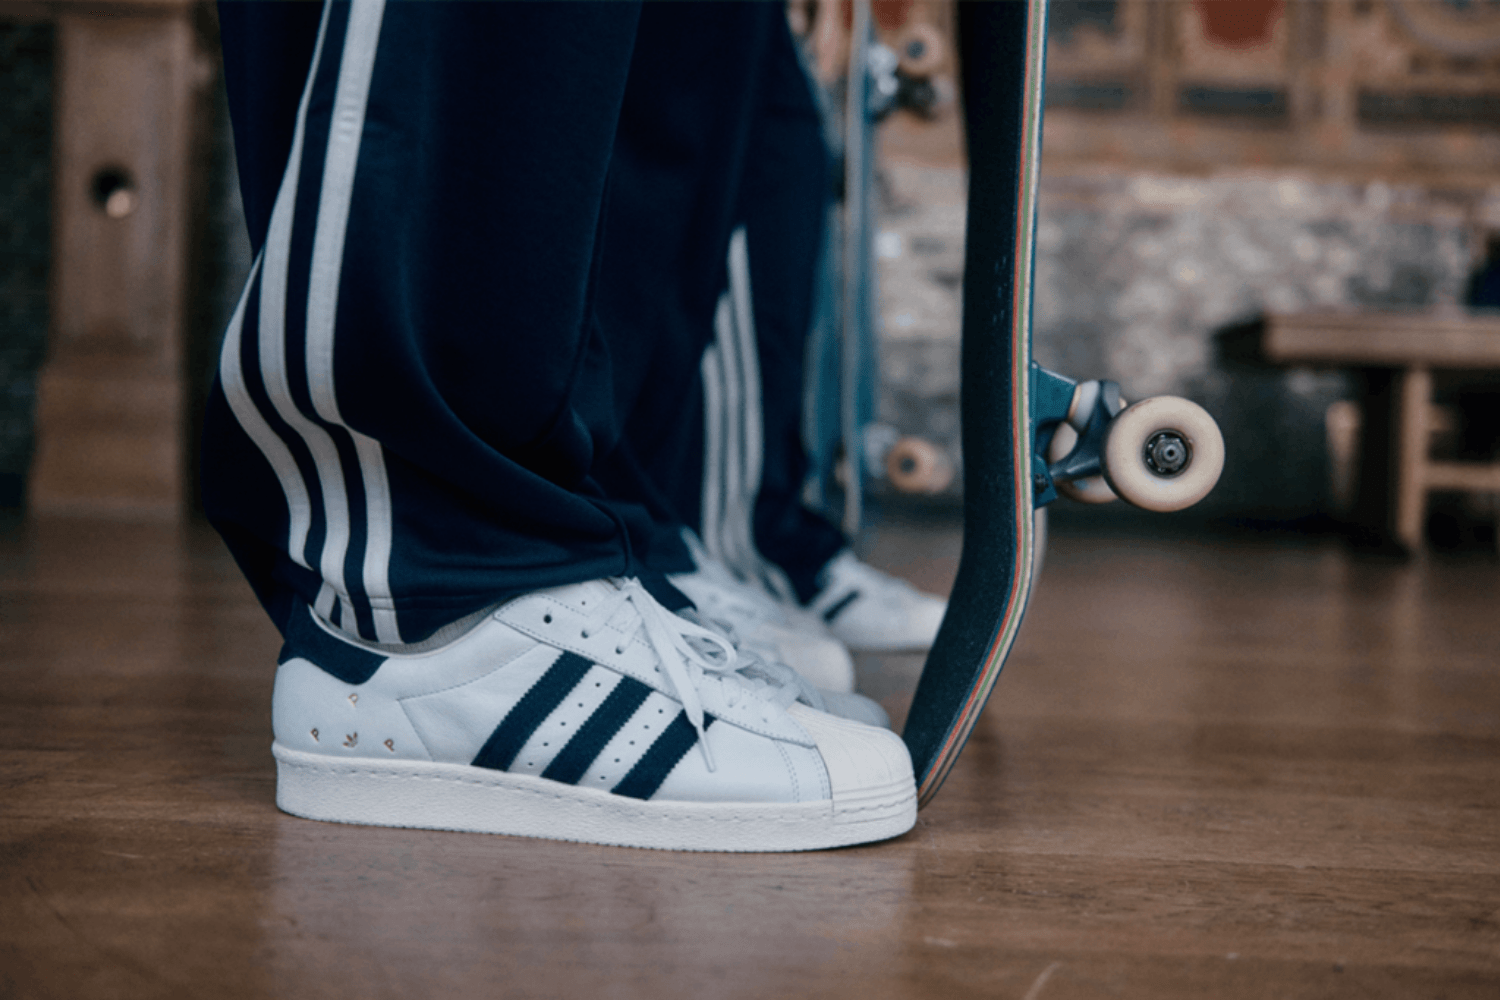 Pop Trading Company transforms adidas classics into skate models